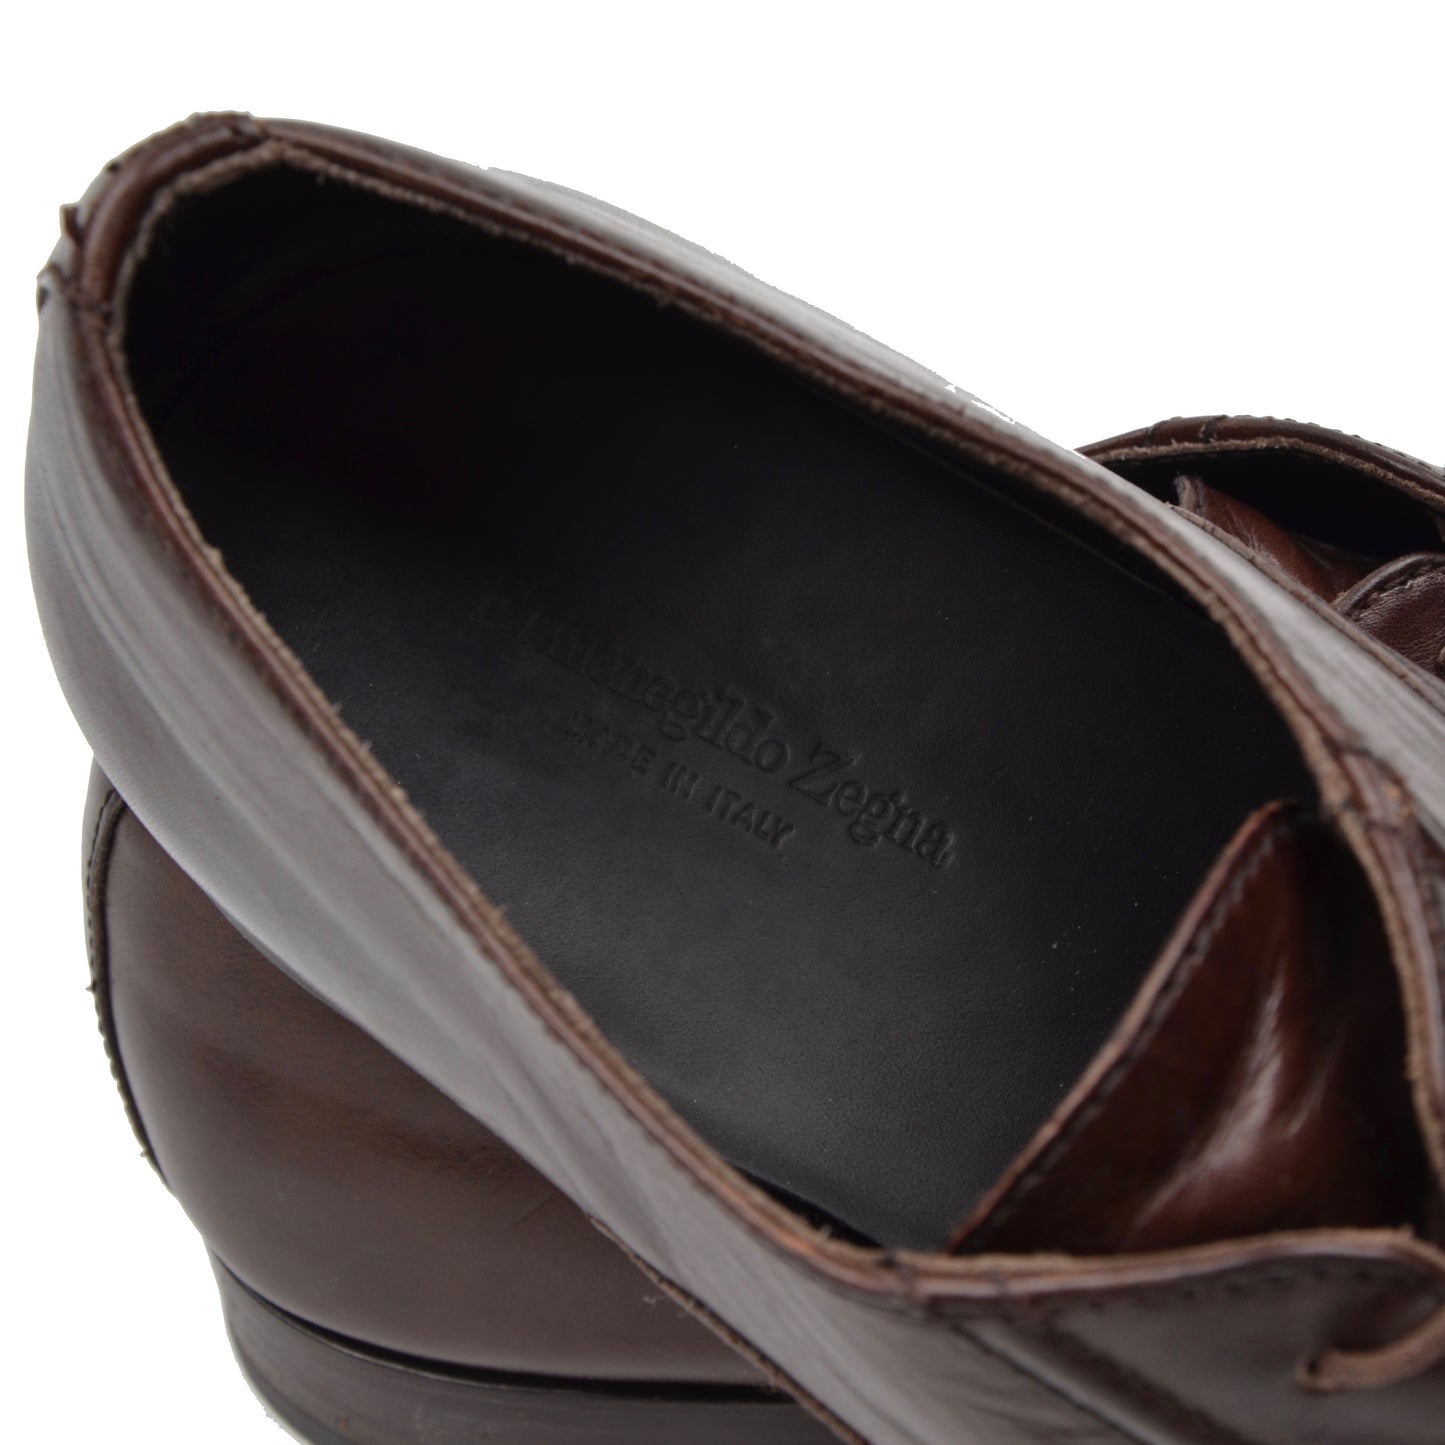 Ermenegildo Zegna Leather Shoes Size 9 EE - Brown